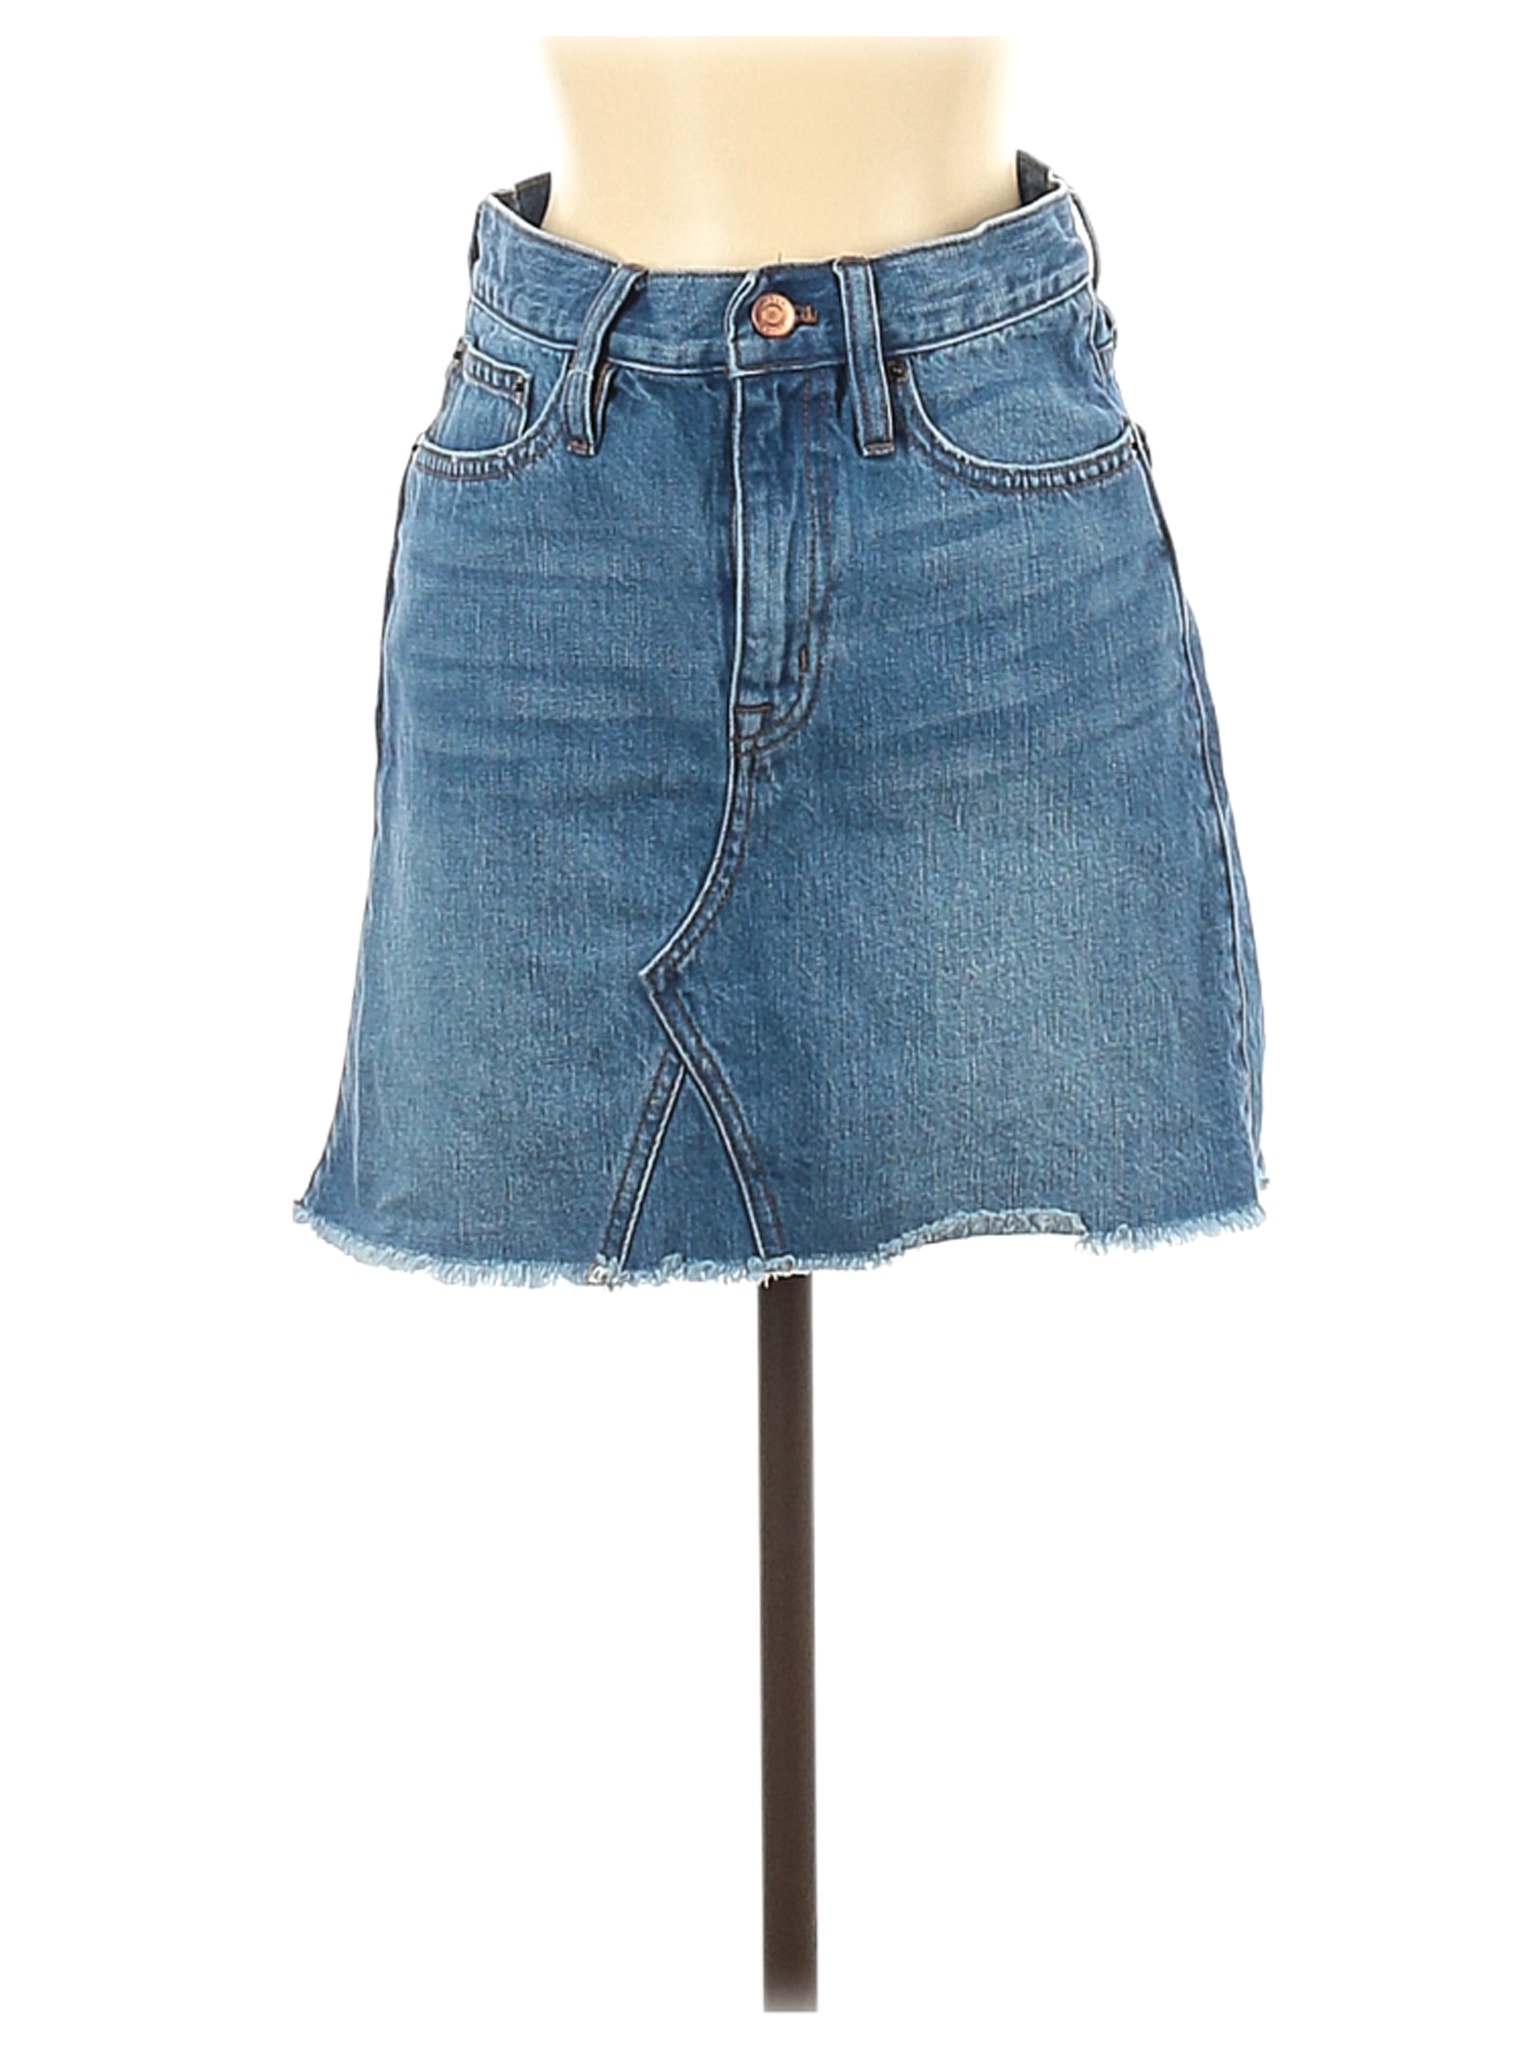 J.Crew Women Blue Denim Skirt 24 W Petites | eBay